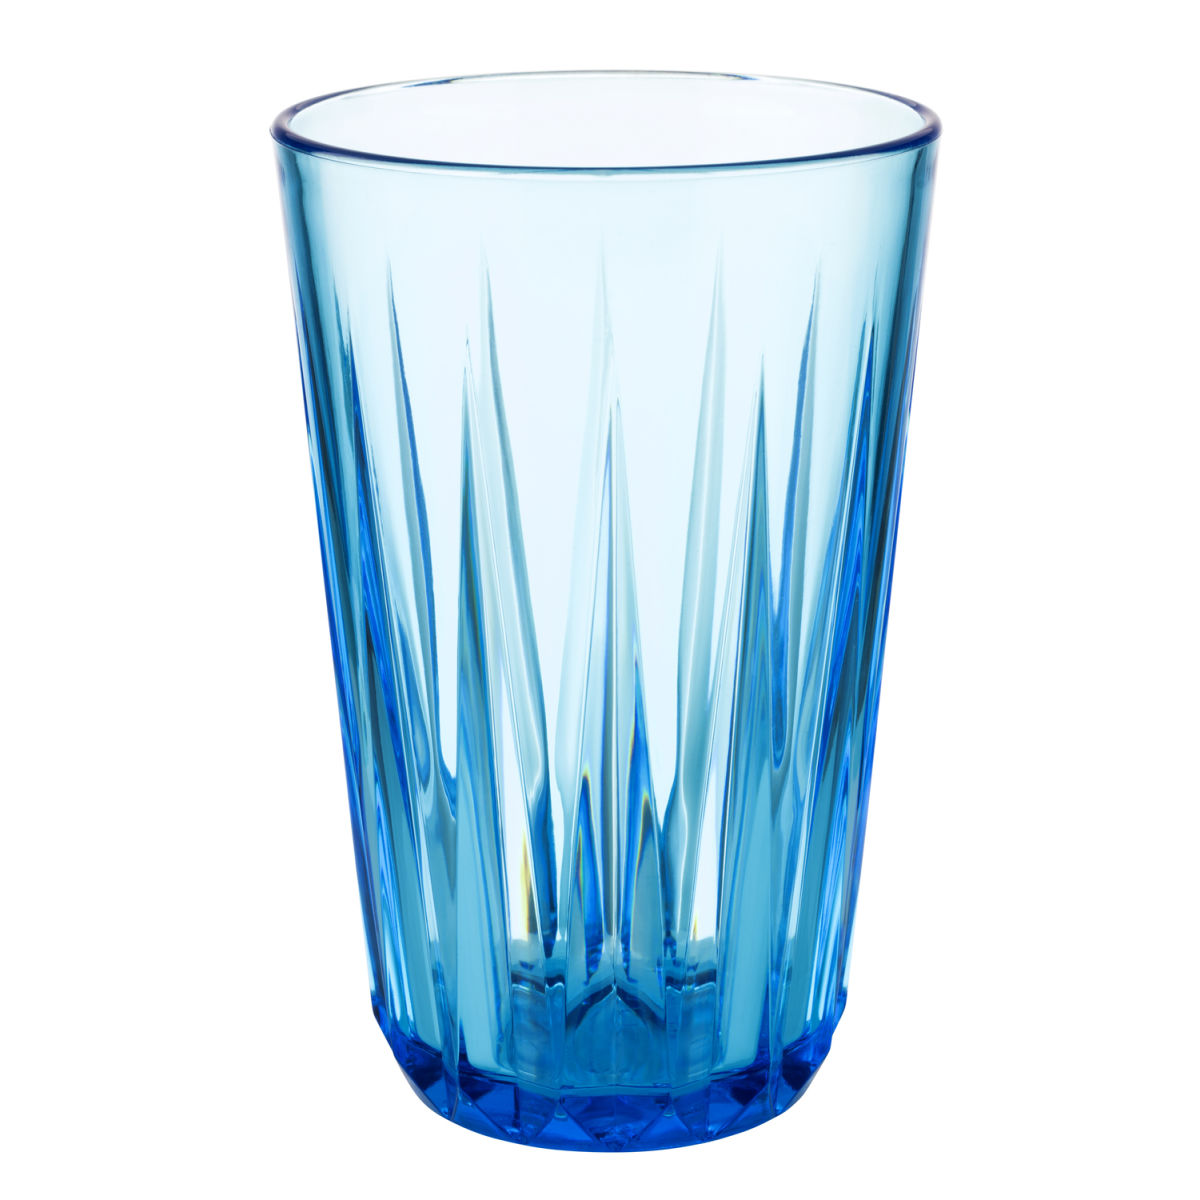 APS Waterglas Crystal; 300ml, 8x12.5 cm (ØxH); blauw